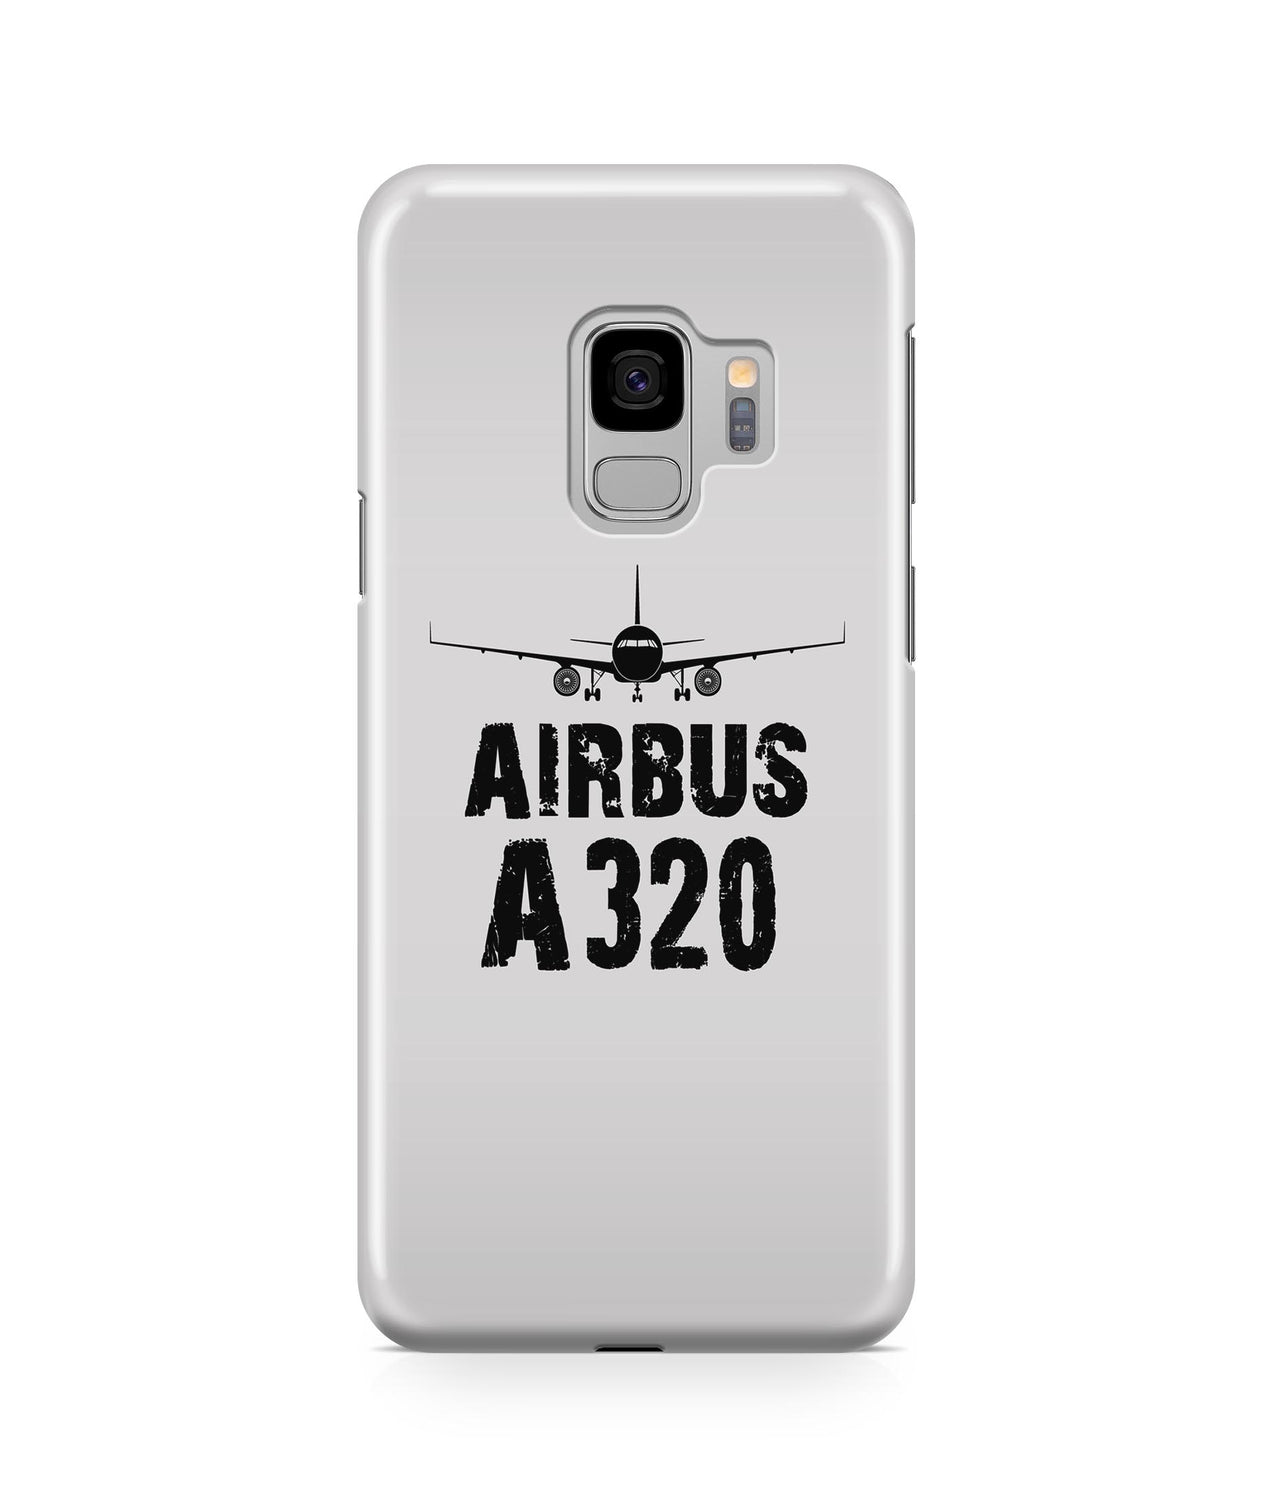 Airbus A320 Plane & Designed Samsung J Cases